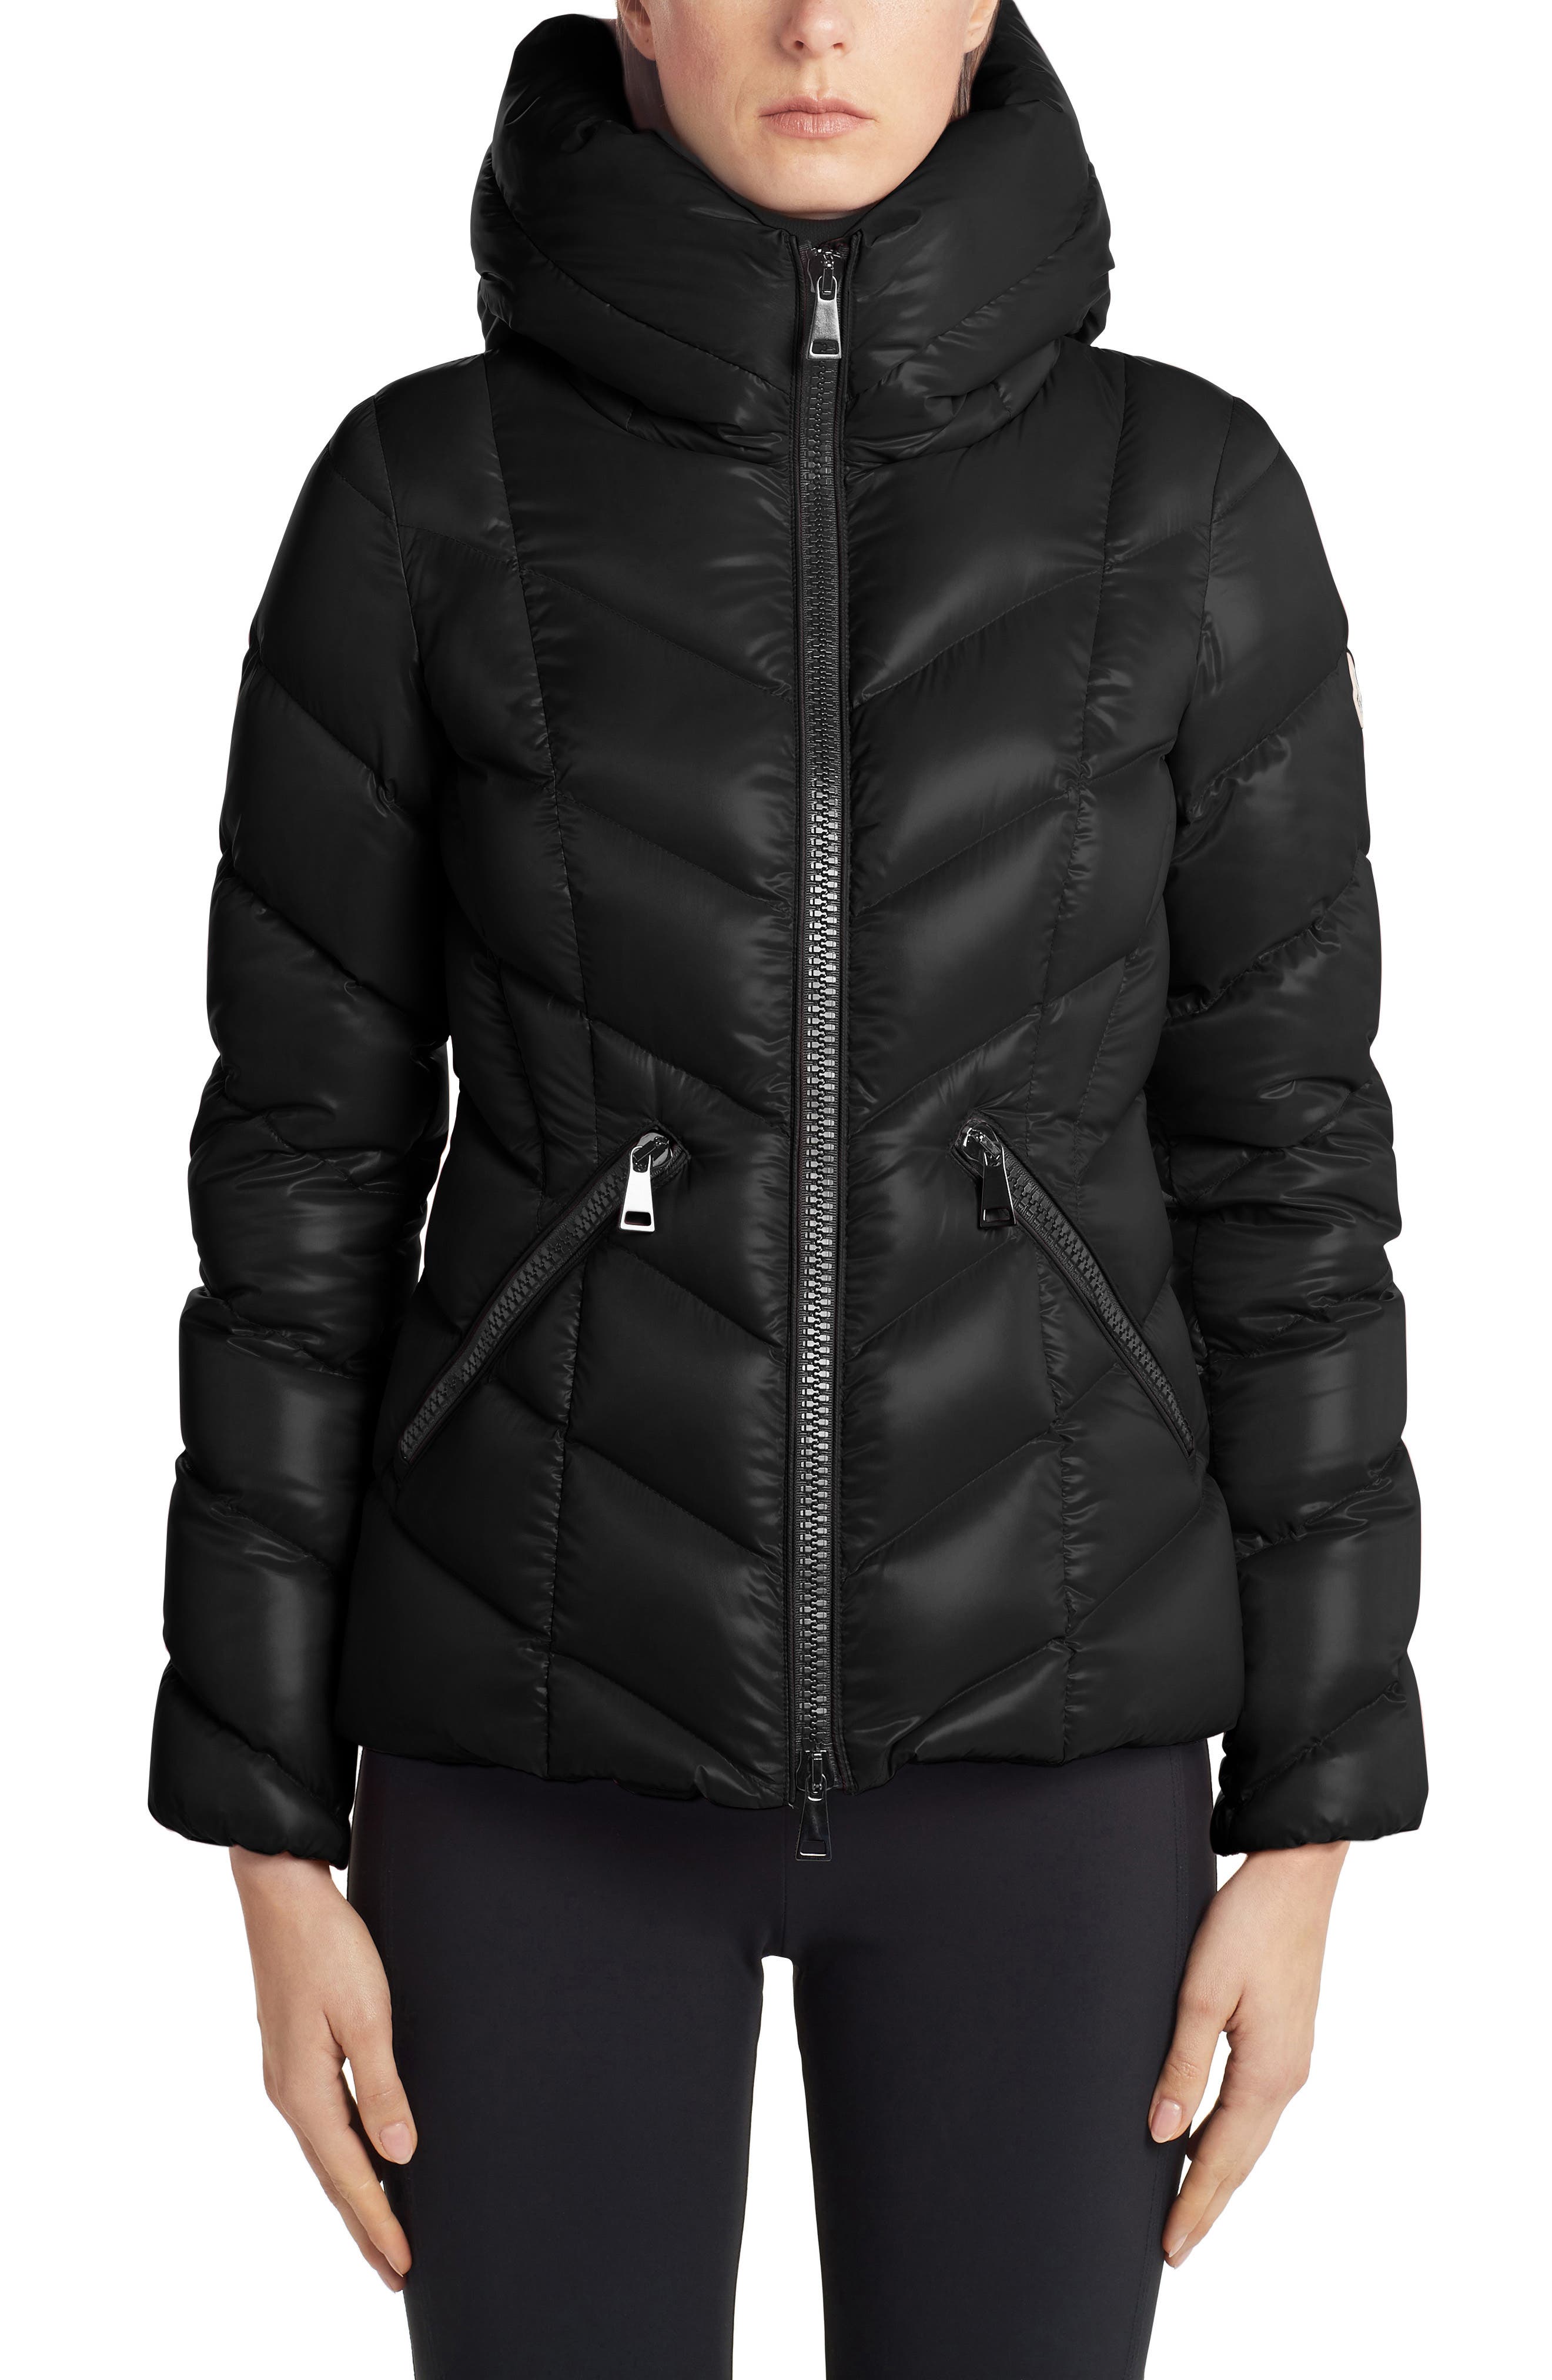 moncler puffer jacket women's sale